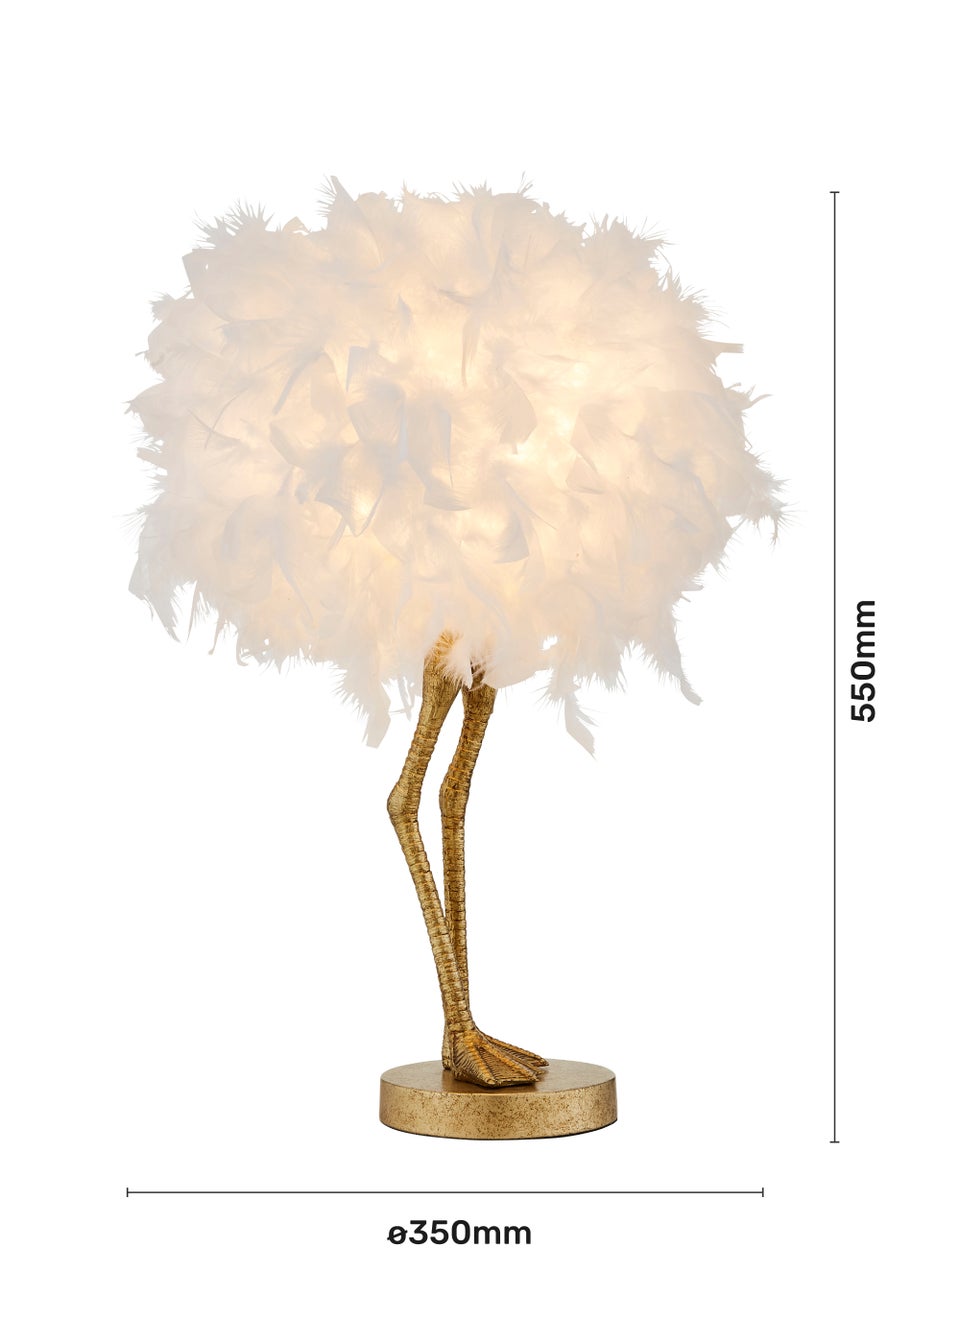 Inlight Ostrich Feather Table Lamp (50cm x 30cm x 30cm)